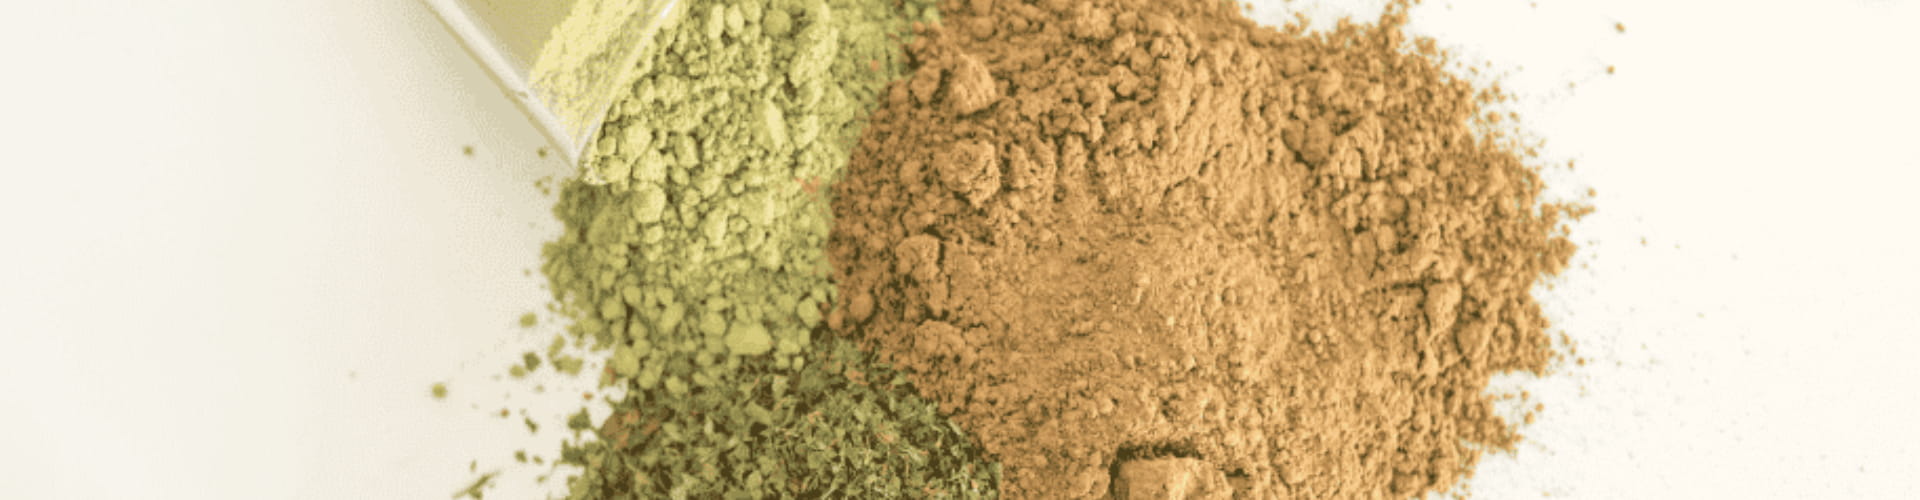 Red, green, and white kratom powder